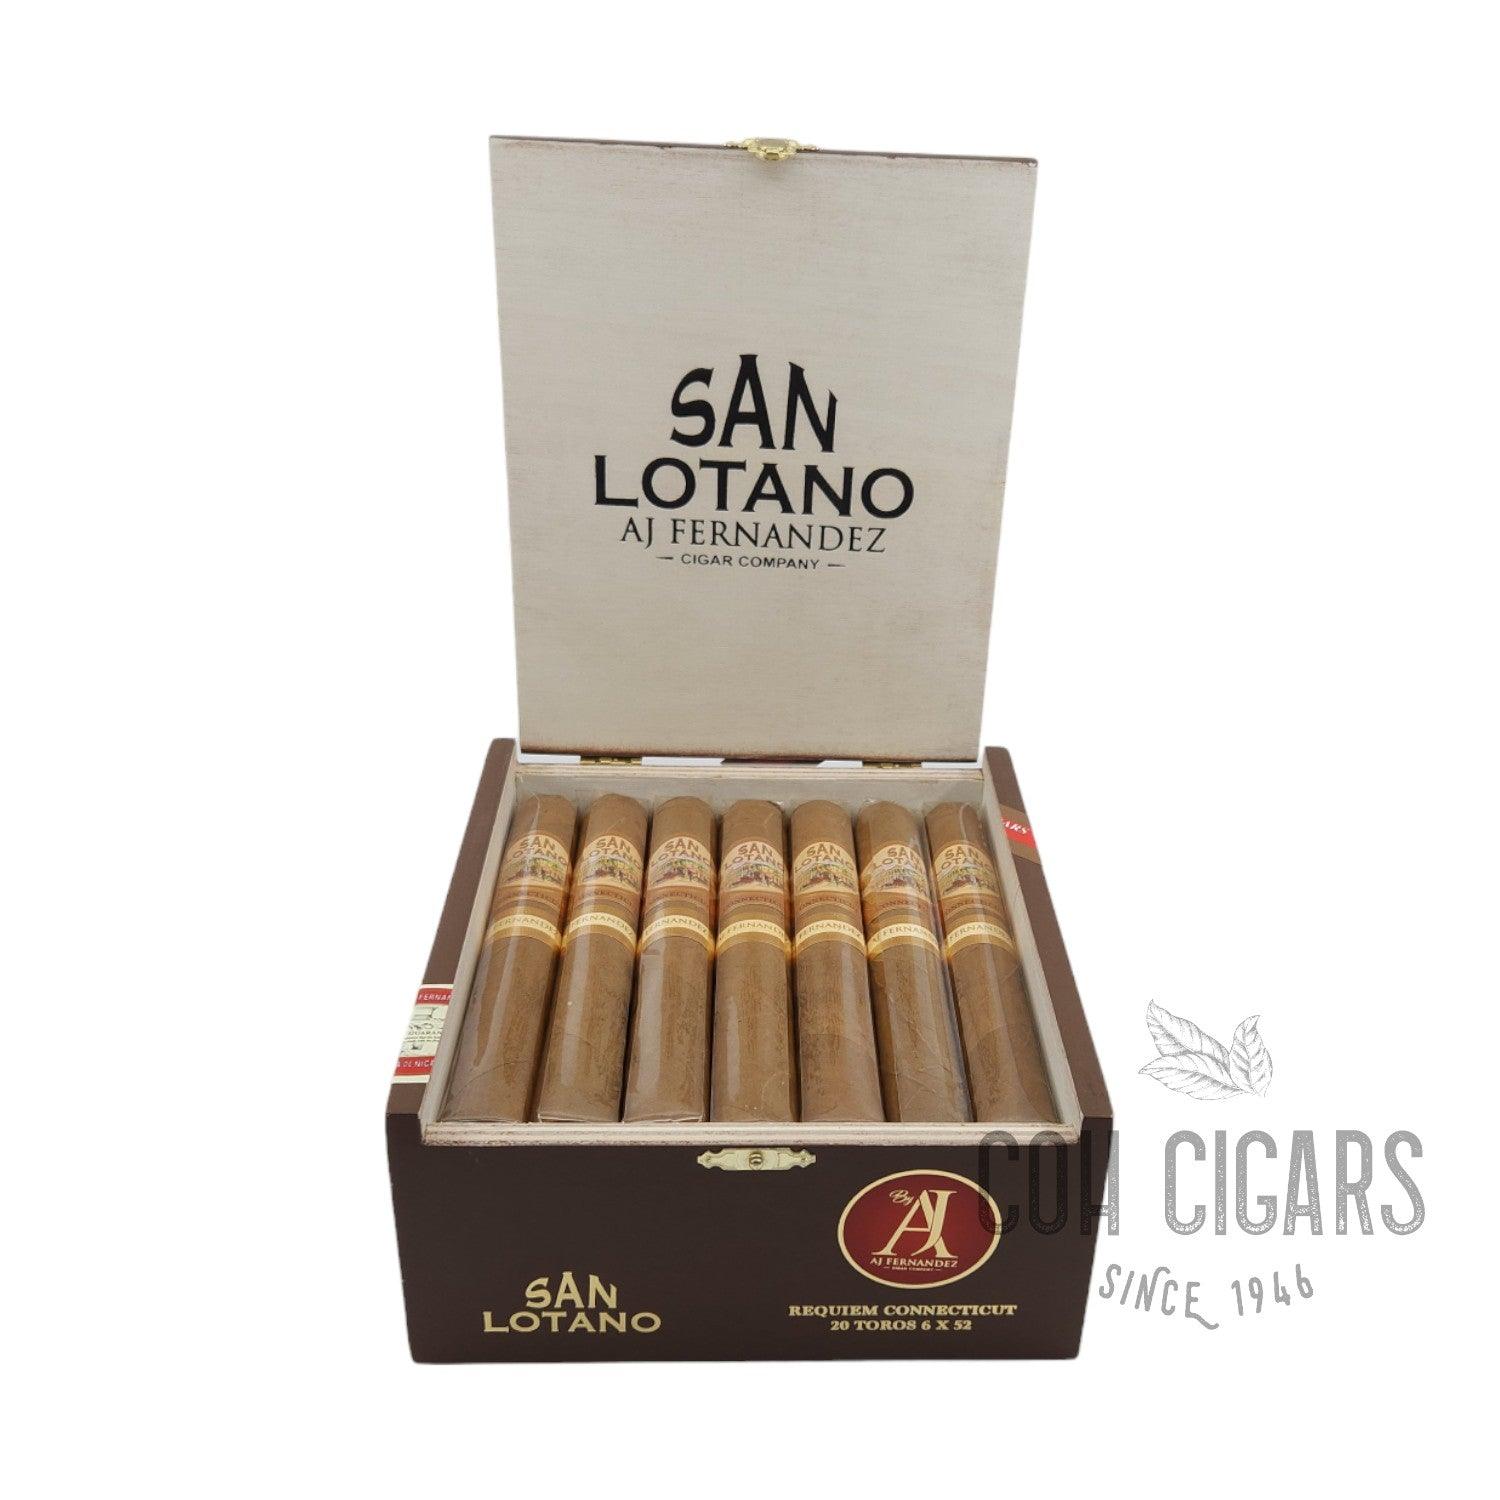 AJ Fernandez Cigar | San Lotano Requiem Connecticut Toro | Box 20 - hk.cohcigars